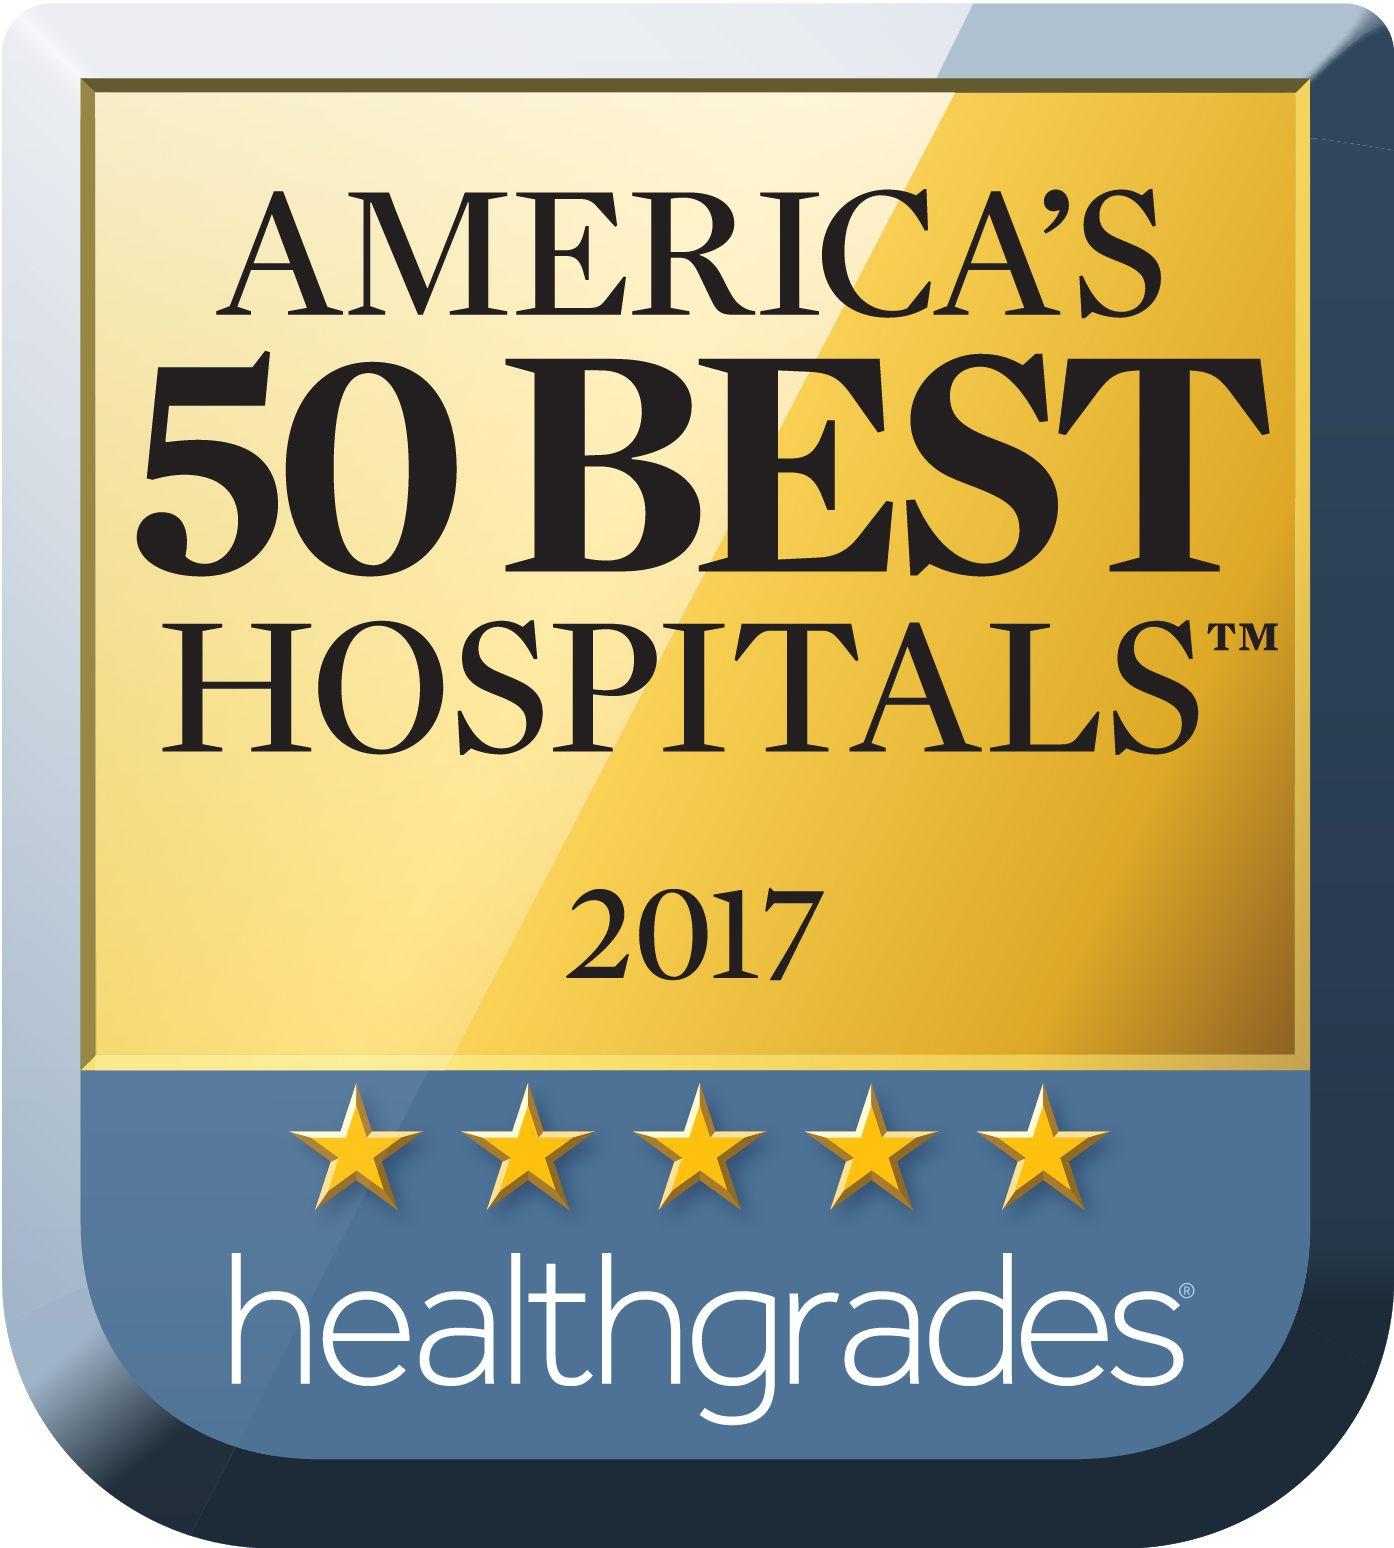 Healthgrades Heart Logo - Healthgrades: Gundersen among America's 50 Best Hospitals